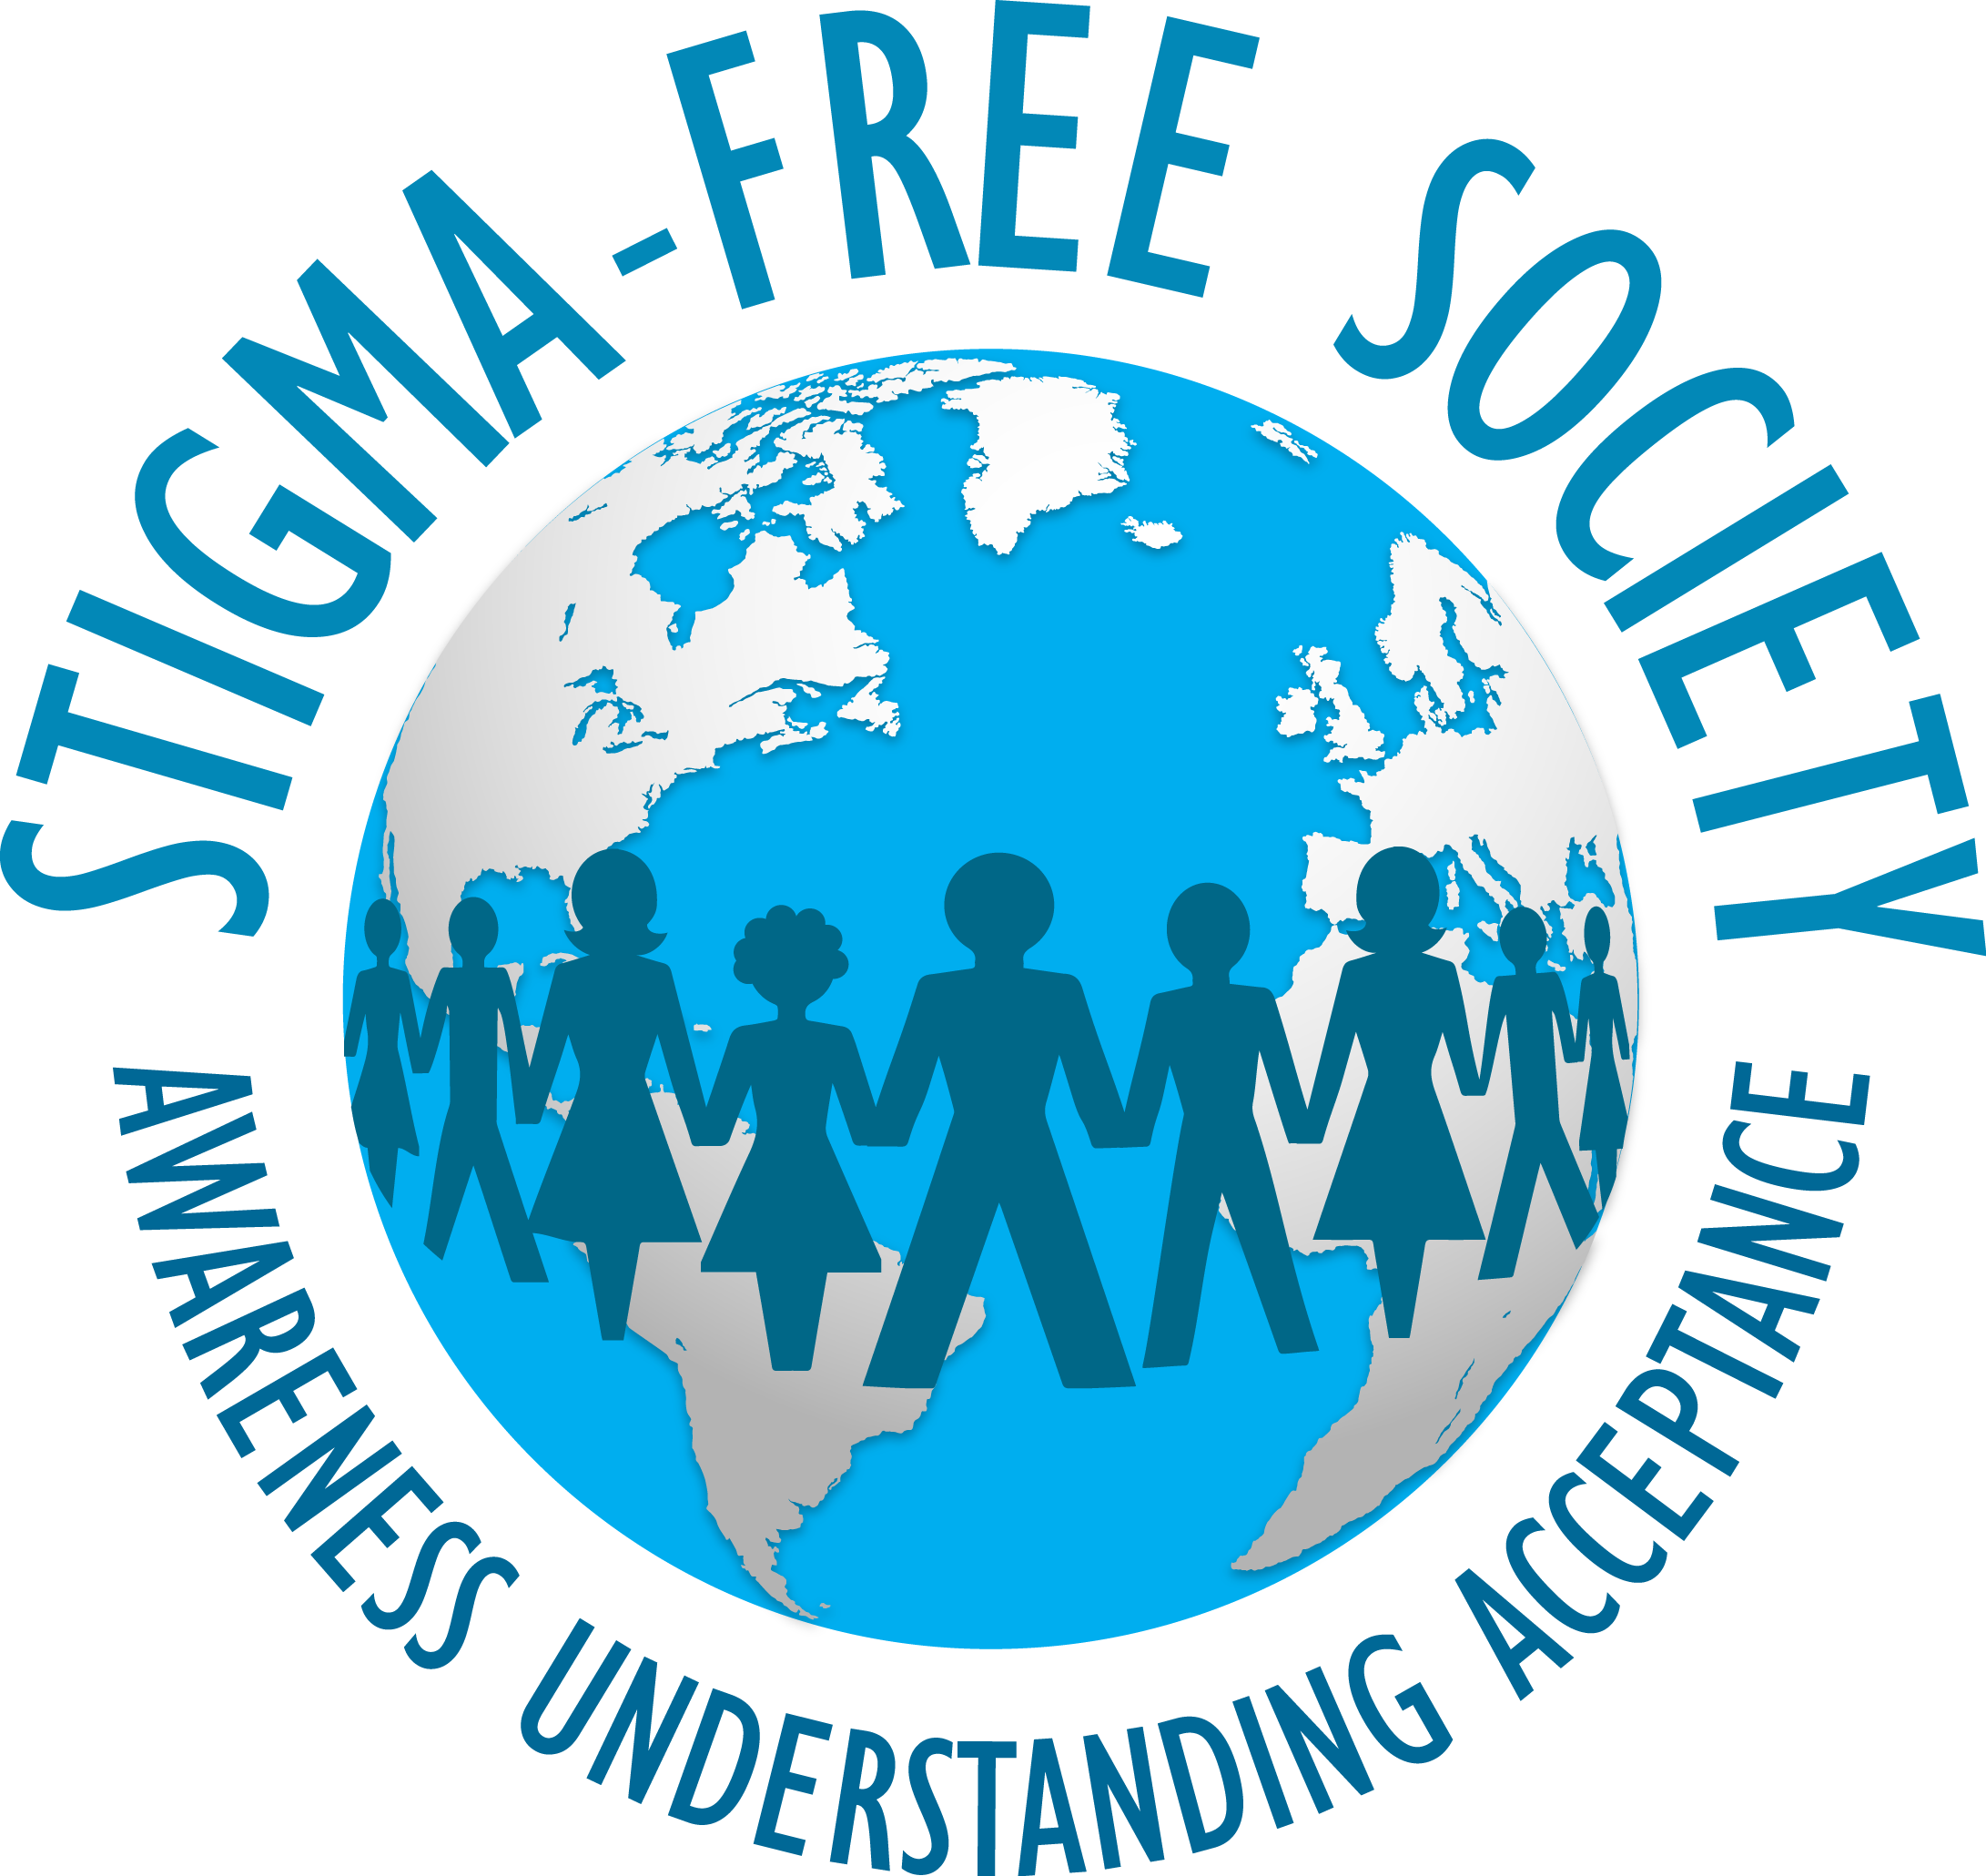 Stigma Free Society's Program Delivery & Covid-19